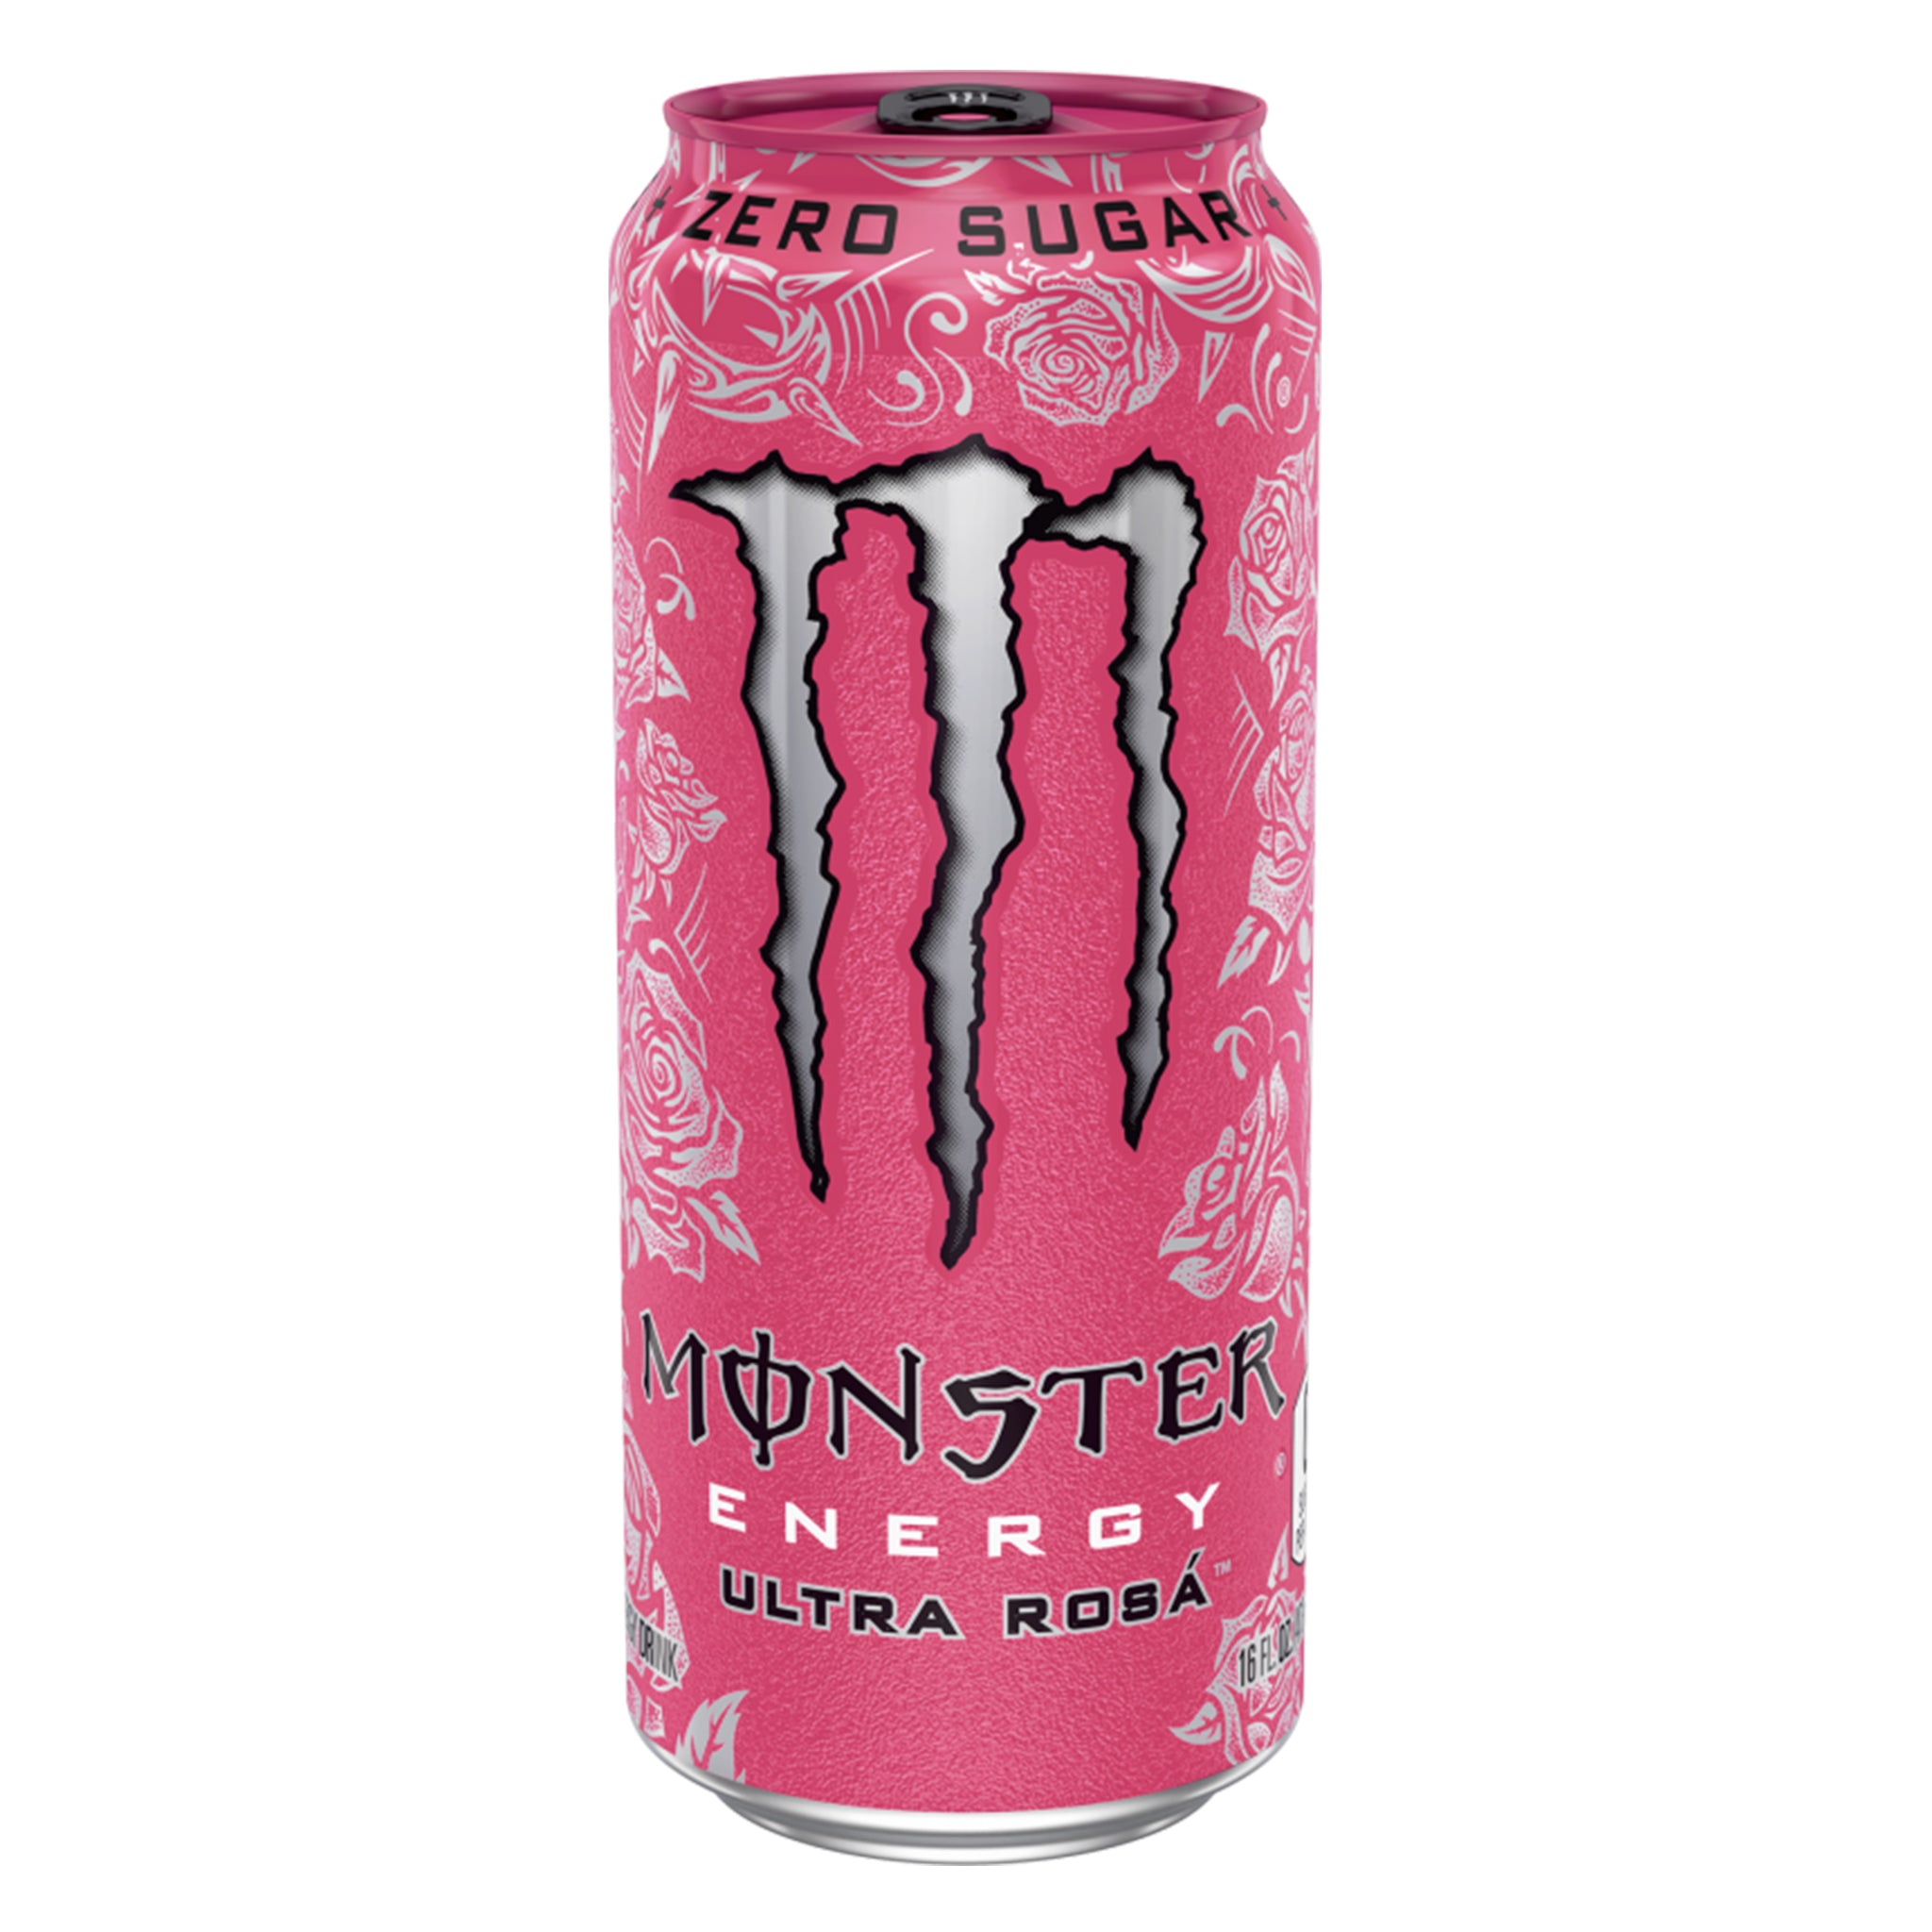 Monster Energy Zero Sugar - Ultra Rosá